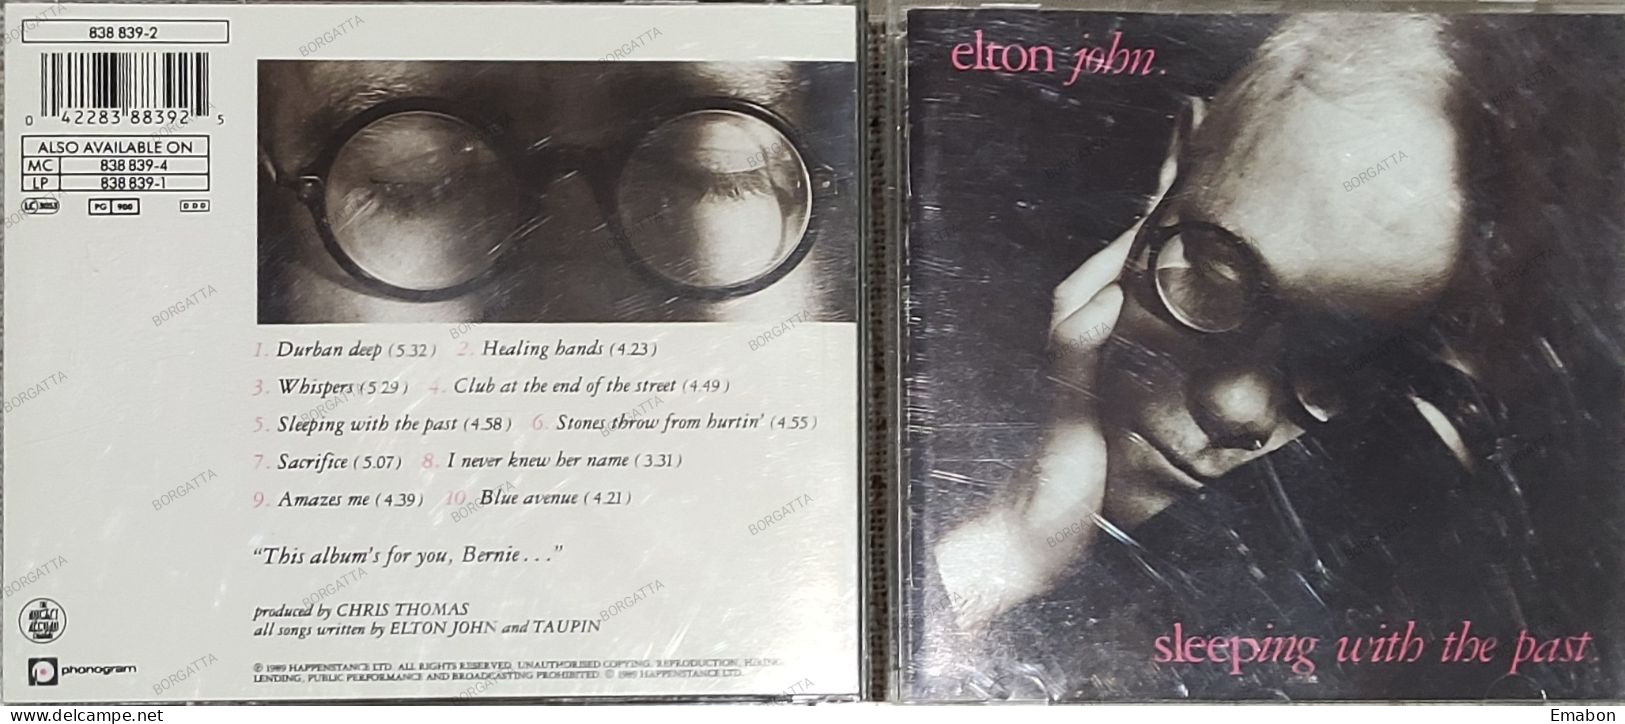 BORGATTA - ROCK - Cd  ELTON JOHN - SLEEPING WITH THE PAST - ROCKET  1989 -  USATO In Buono Stato - Rock